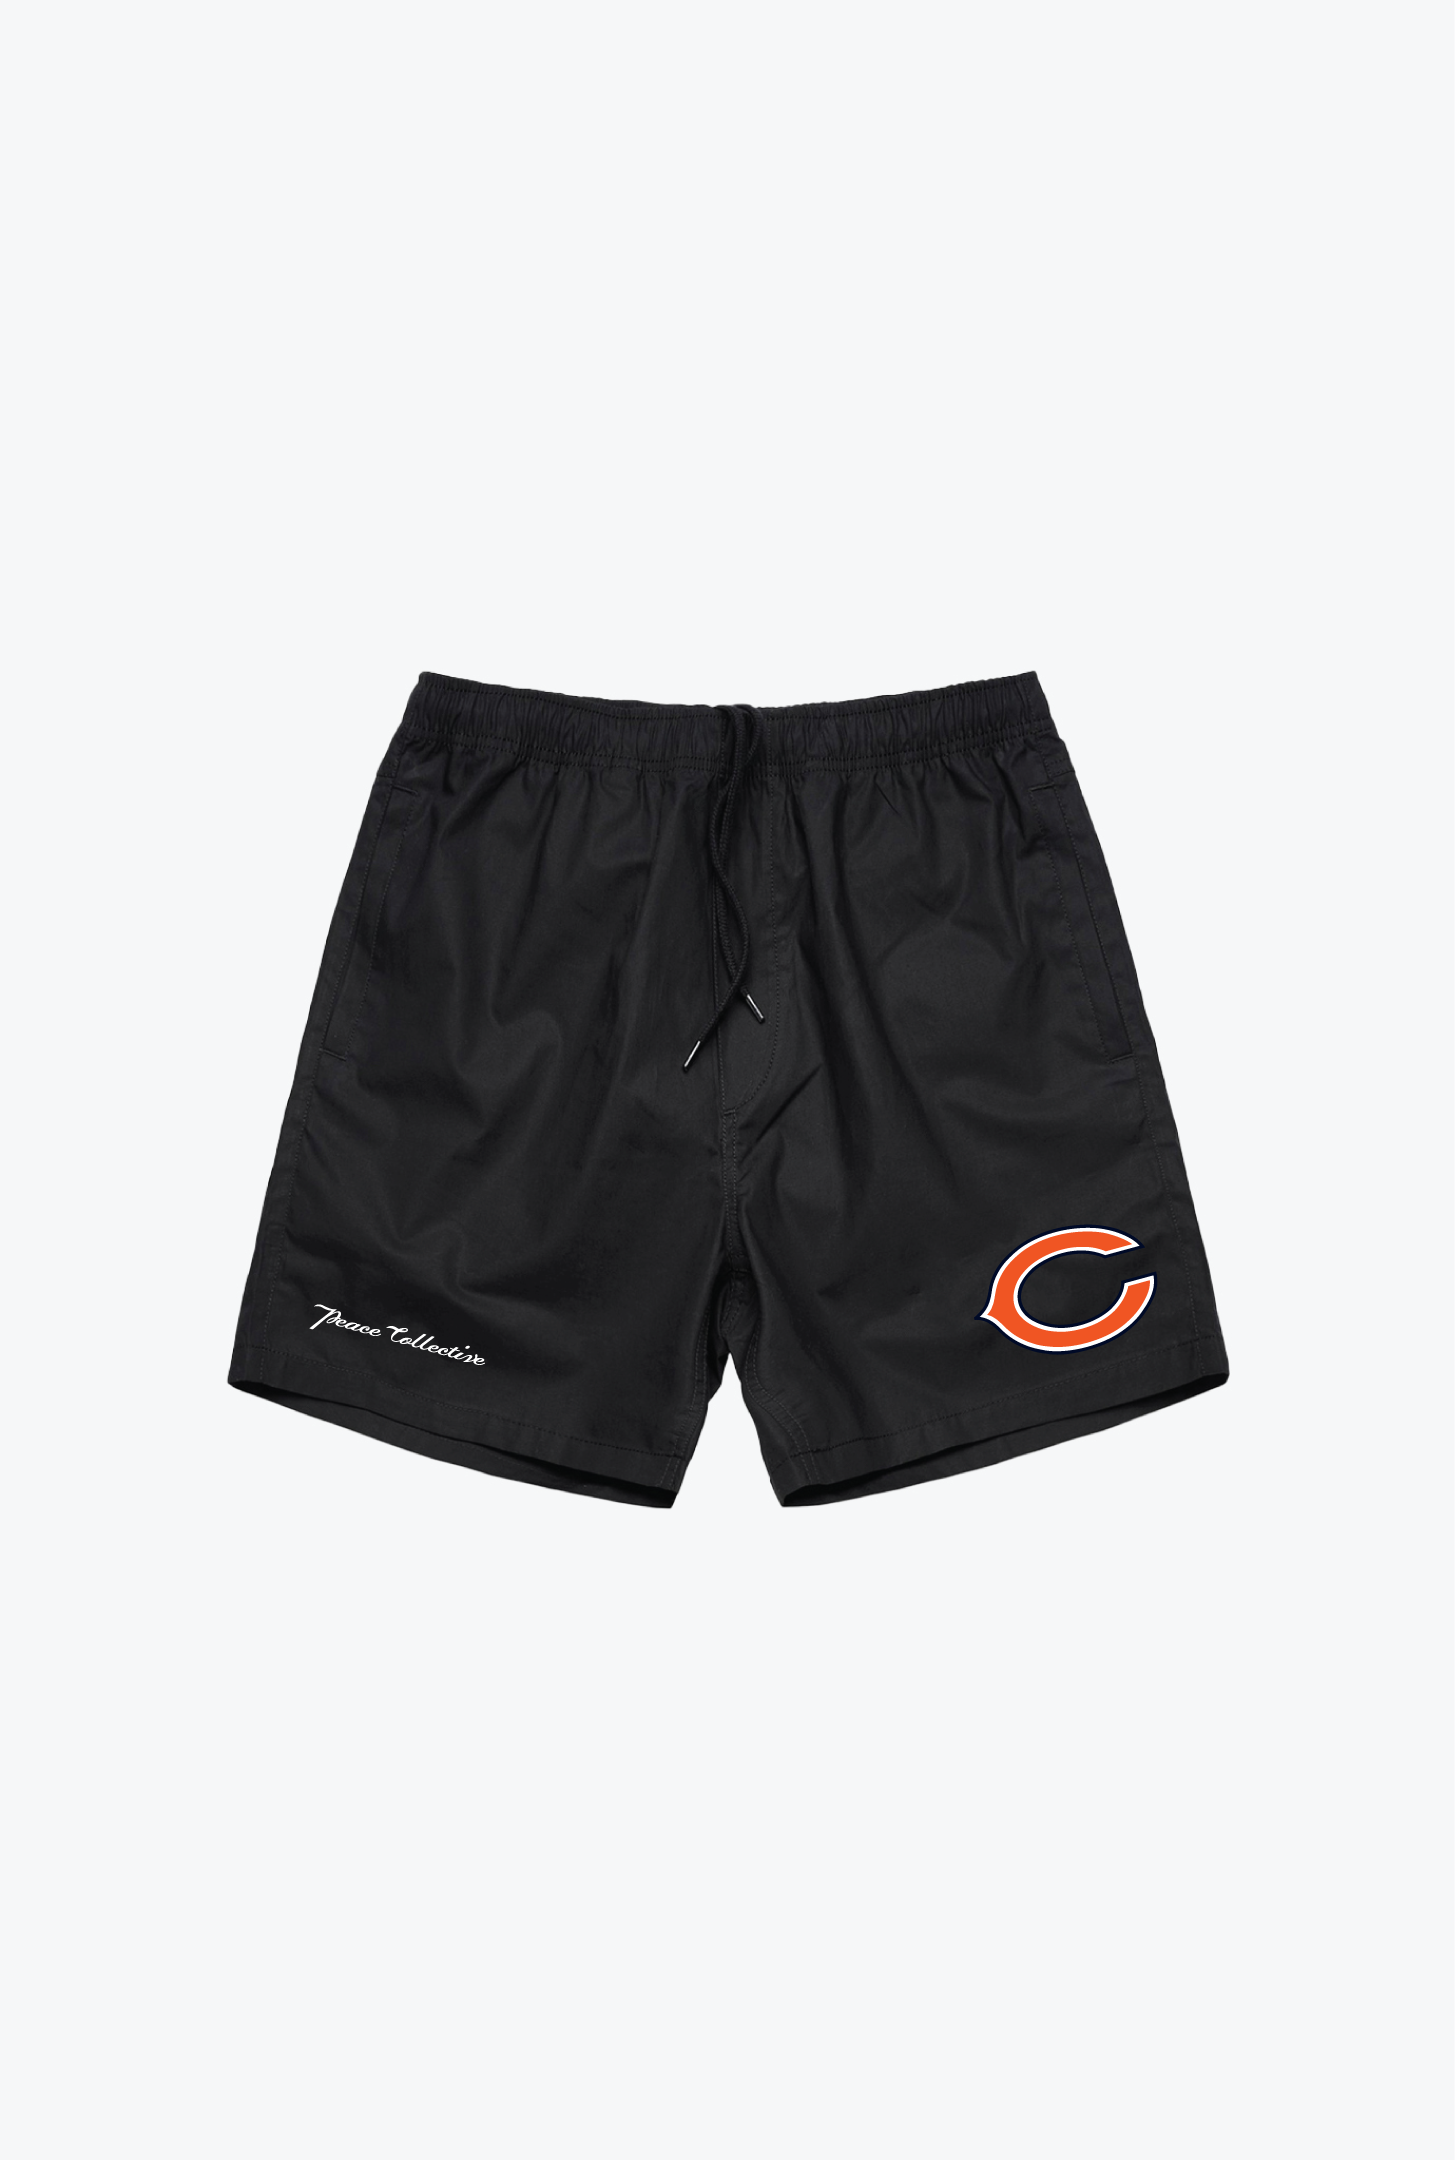 Chicago Bears Board Shorts - Black